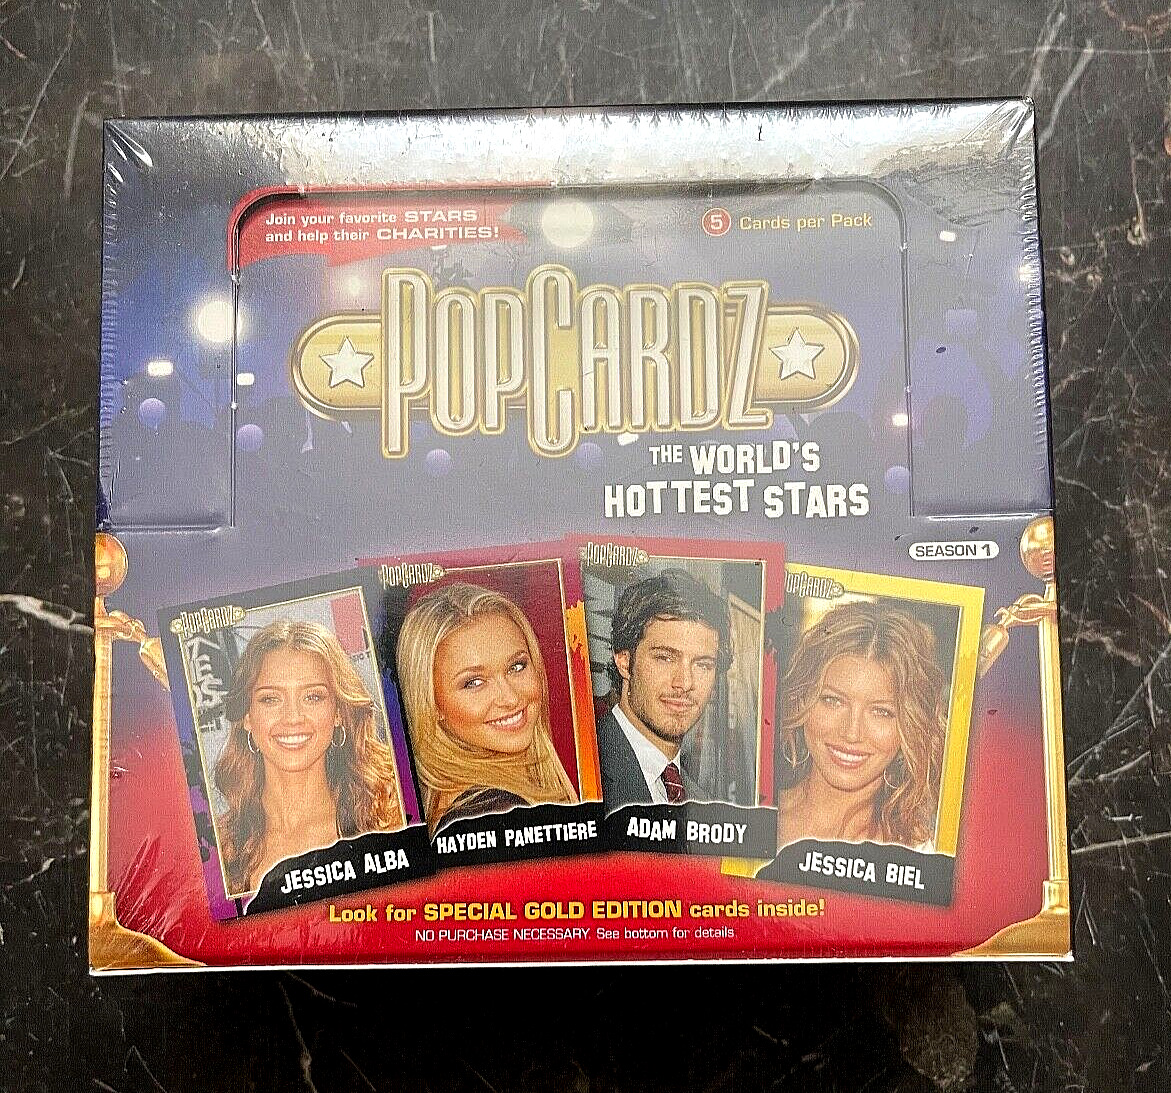 2008 POPCARDZ Season 1 World's Hottest Stars Sealed w/Gold Edition Cards-RARE